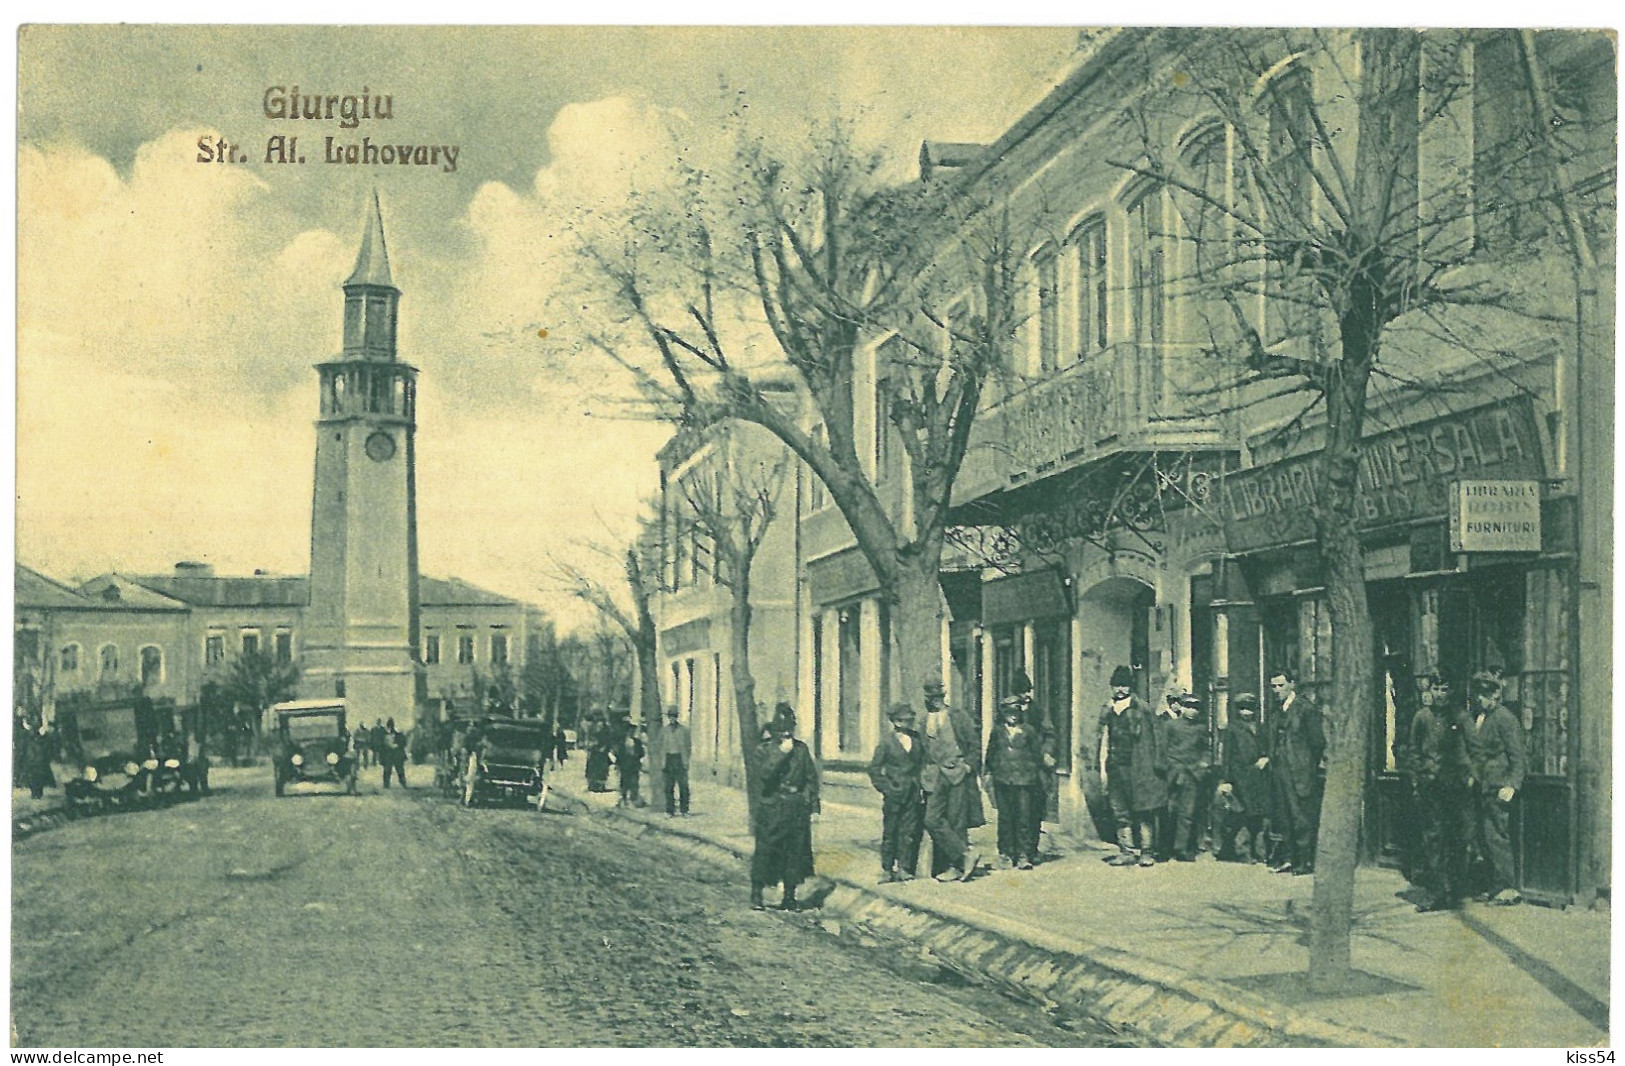 RO 83 - 23689 GIURGIU, Firemen Tower, Stret Stores, Romania - Old Postcard - Used - 1928 - Romania